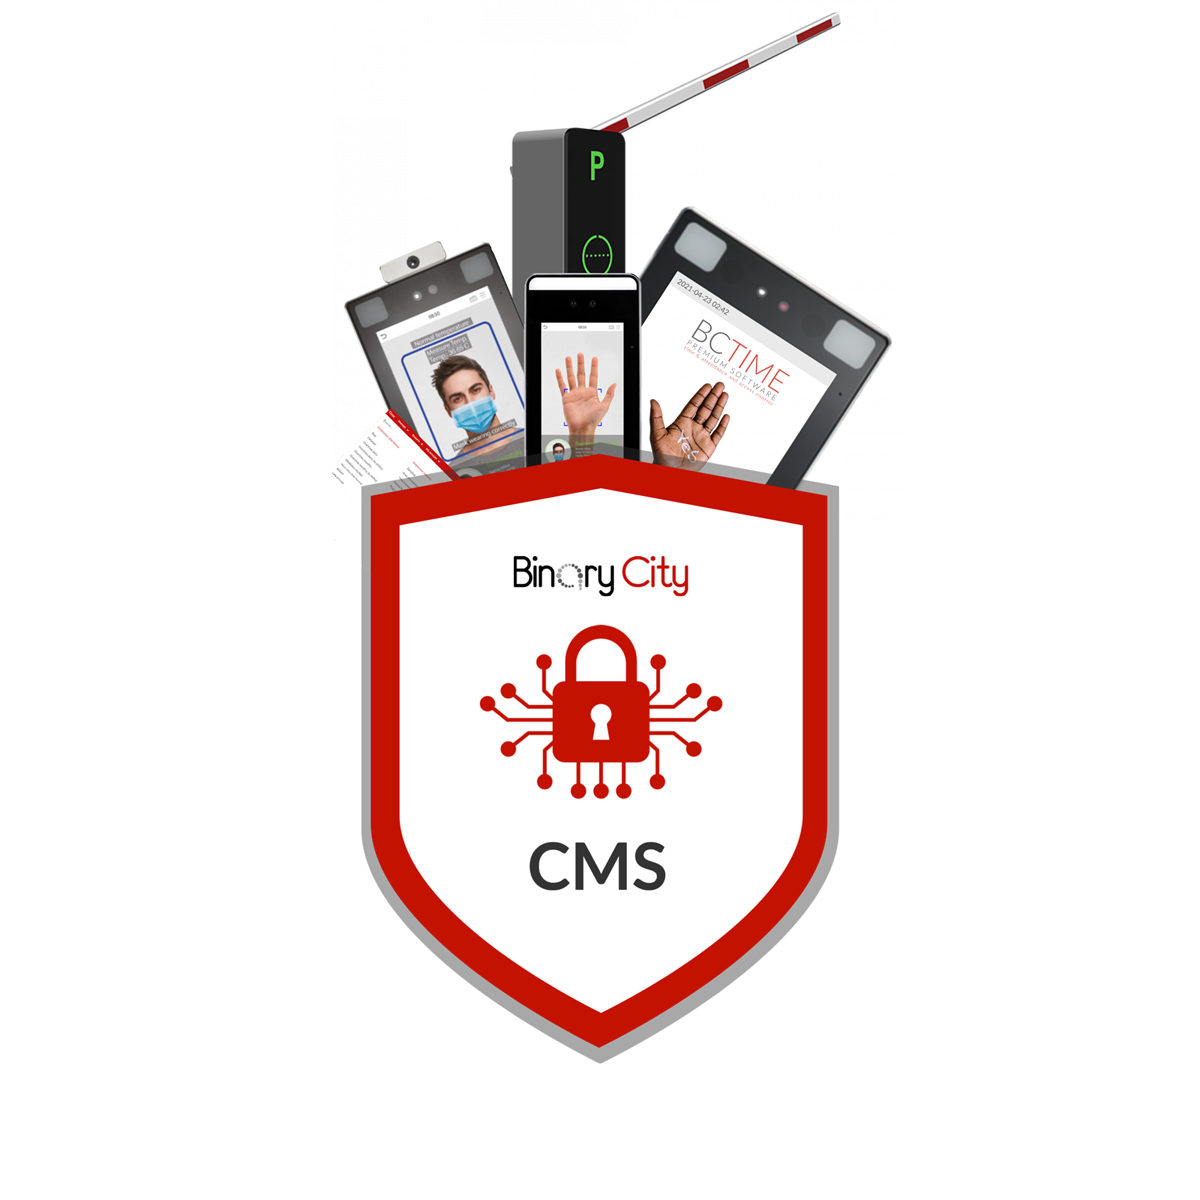 CMS Logo with ZKTeco devices